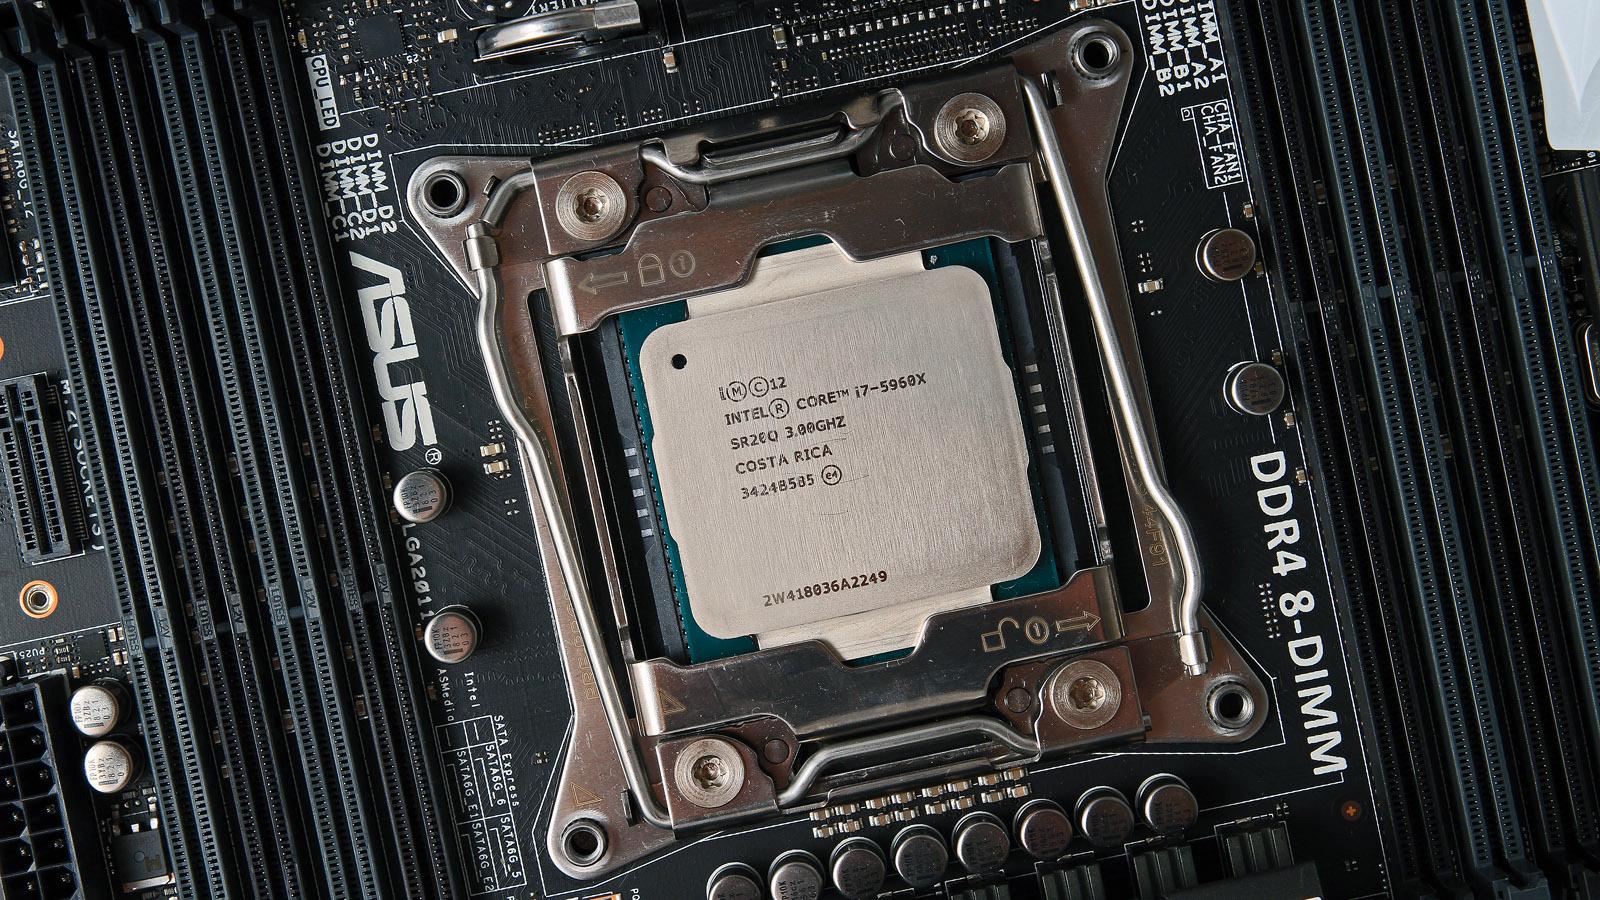 Intel Core i7 5960X - Haswell-E